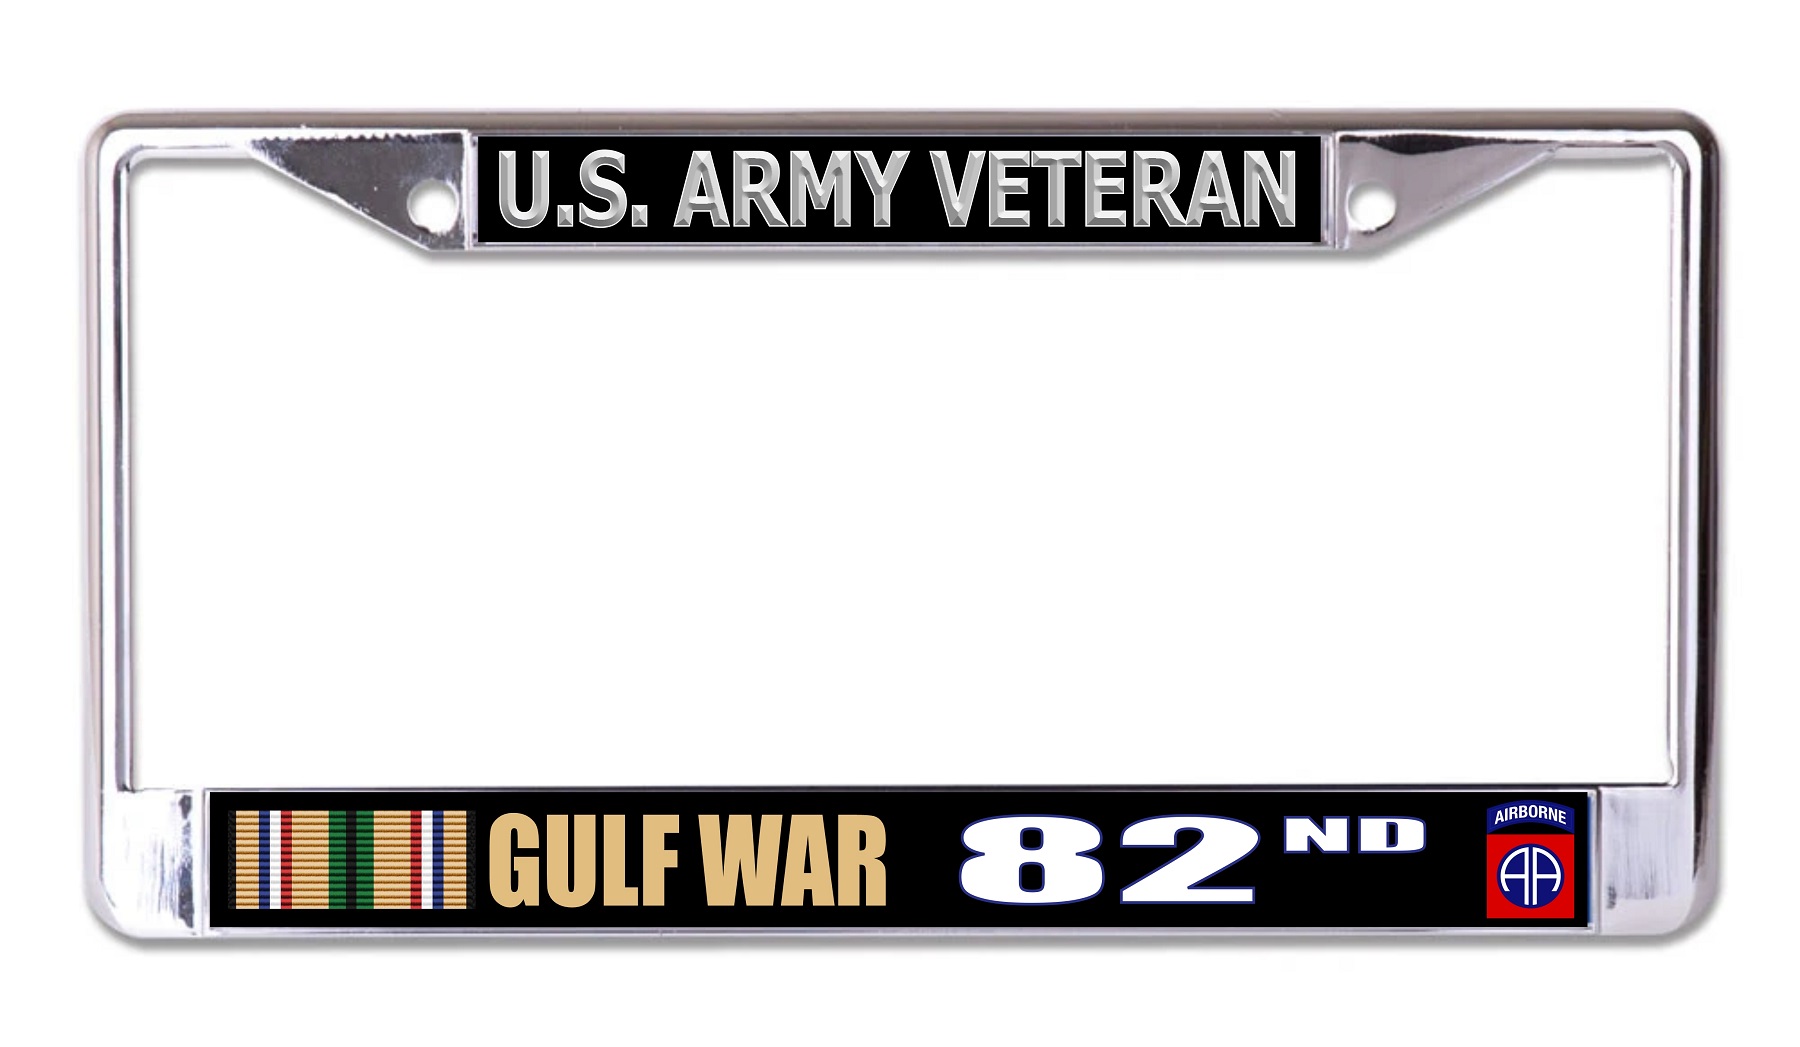 U.S. Army Veteran Gulf War 82nd Airborne Chrome LICENSE PLATE Frame